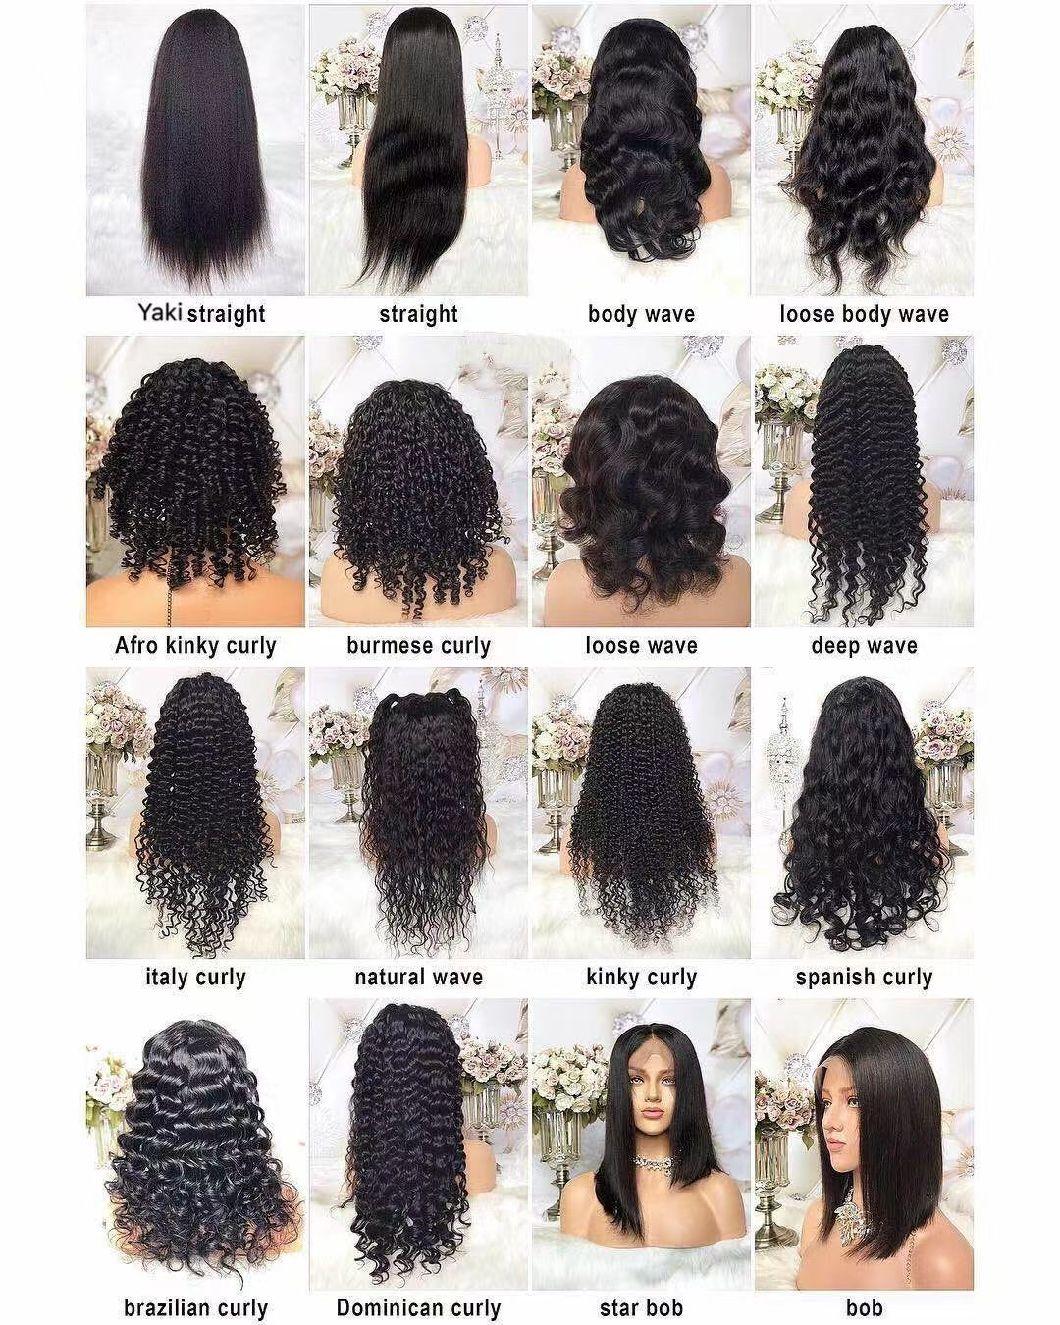 Wholesale Vendor Pixie Cut Short Human Hair Wig for Black Women Brazilian HD Full Lace Human Hair